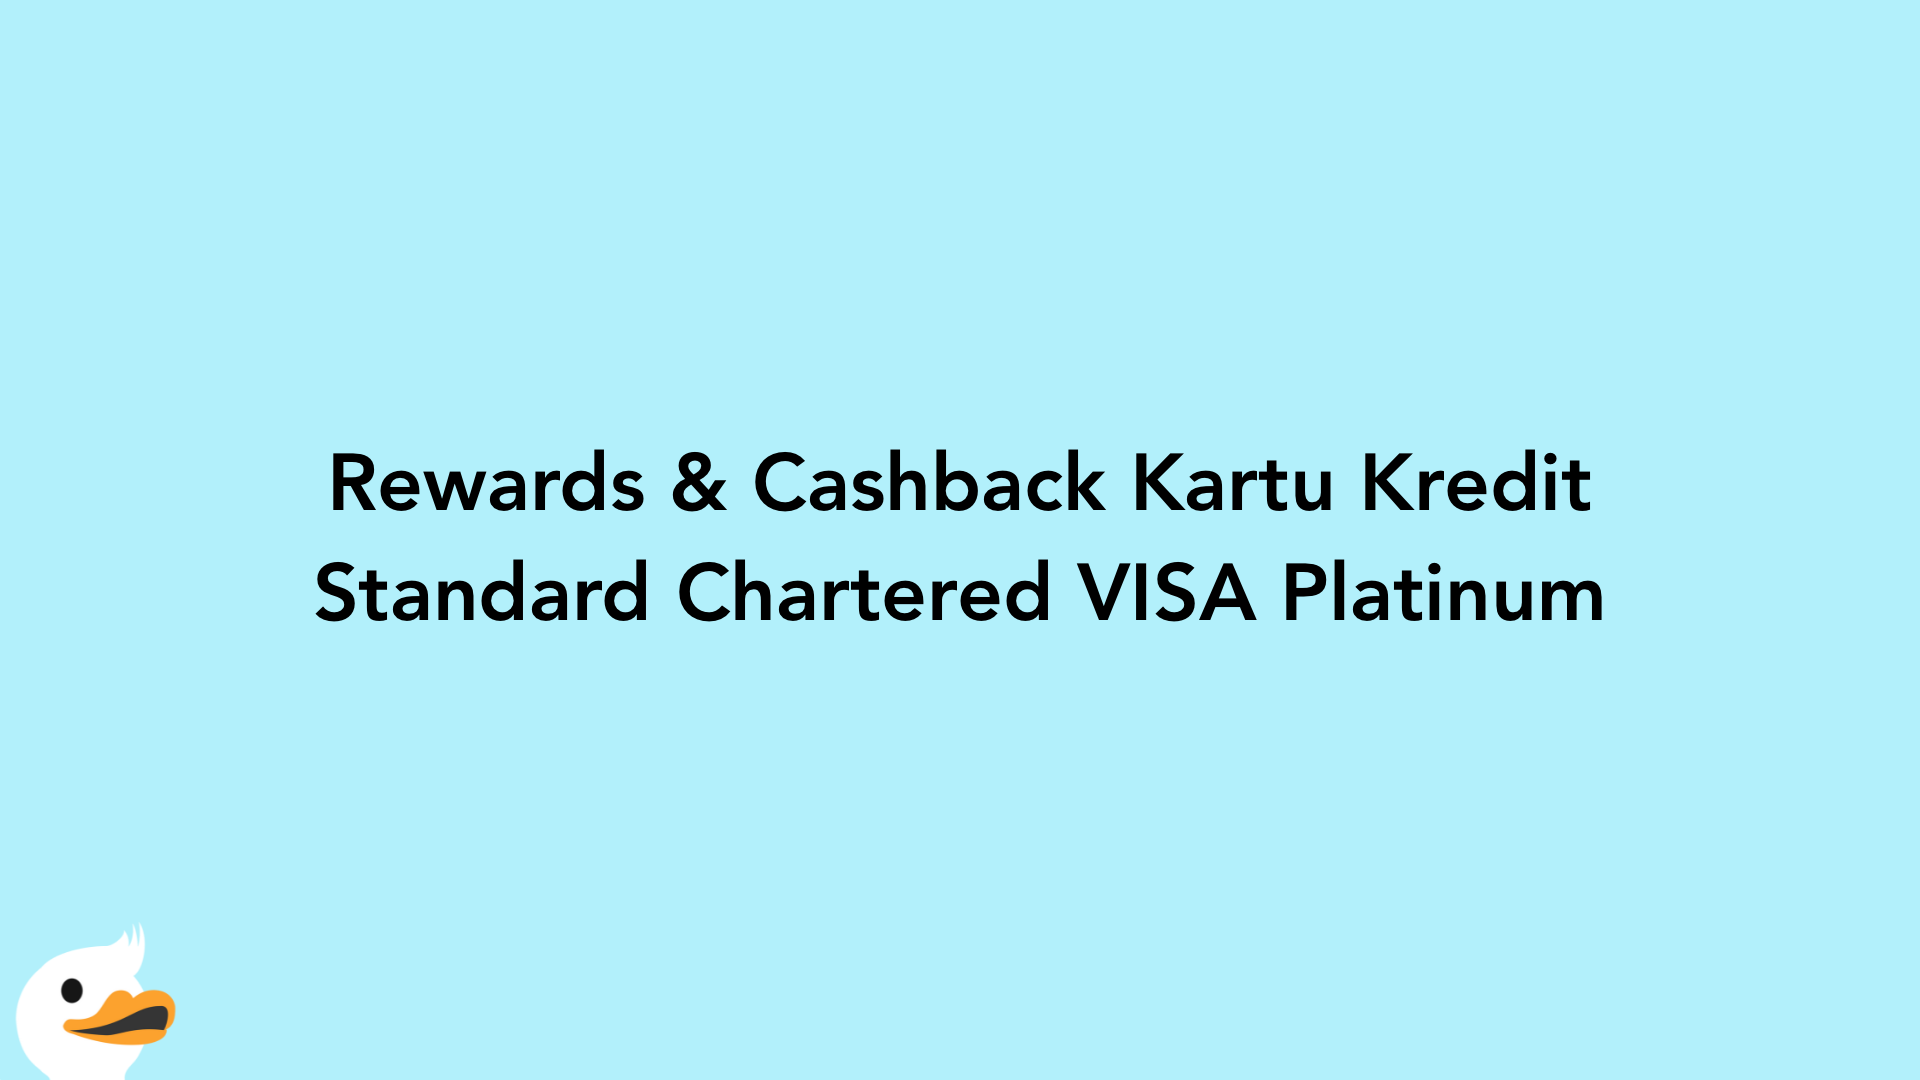 Rewards & Cashback Kartu Kredit Standard Chartered VISA Platinum